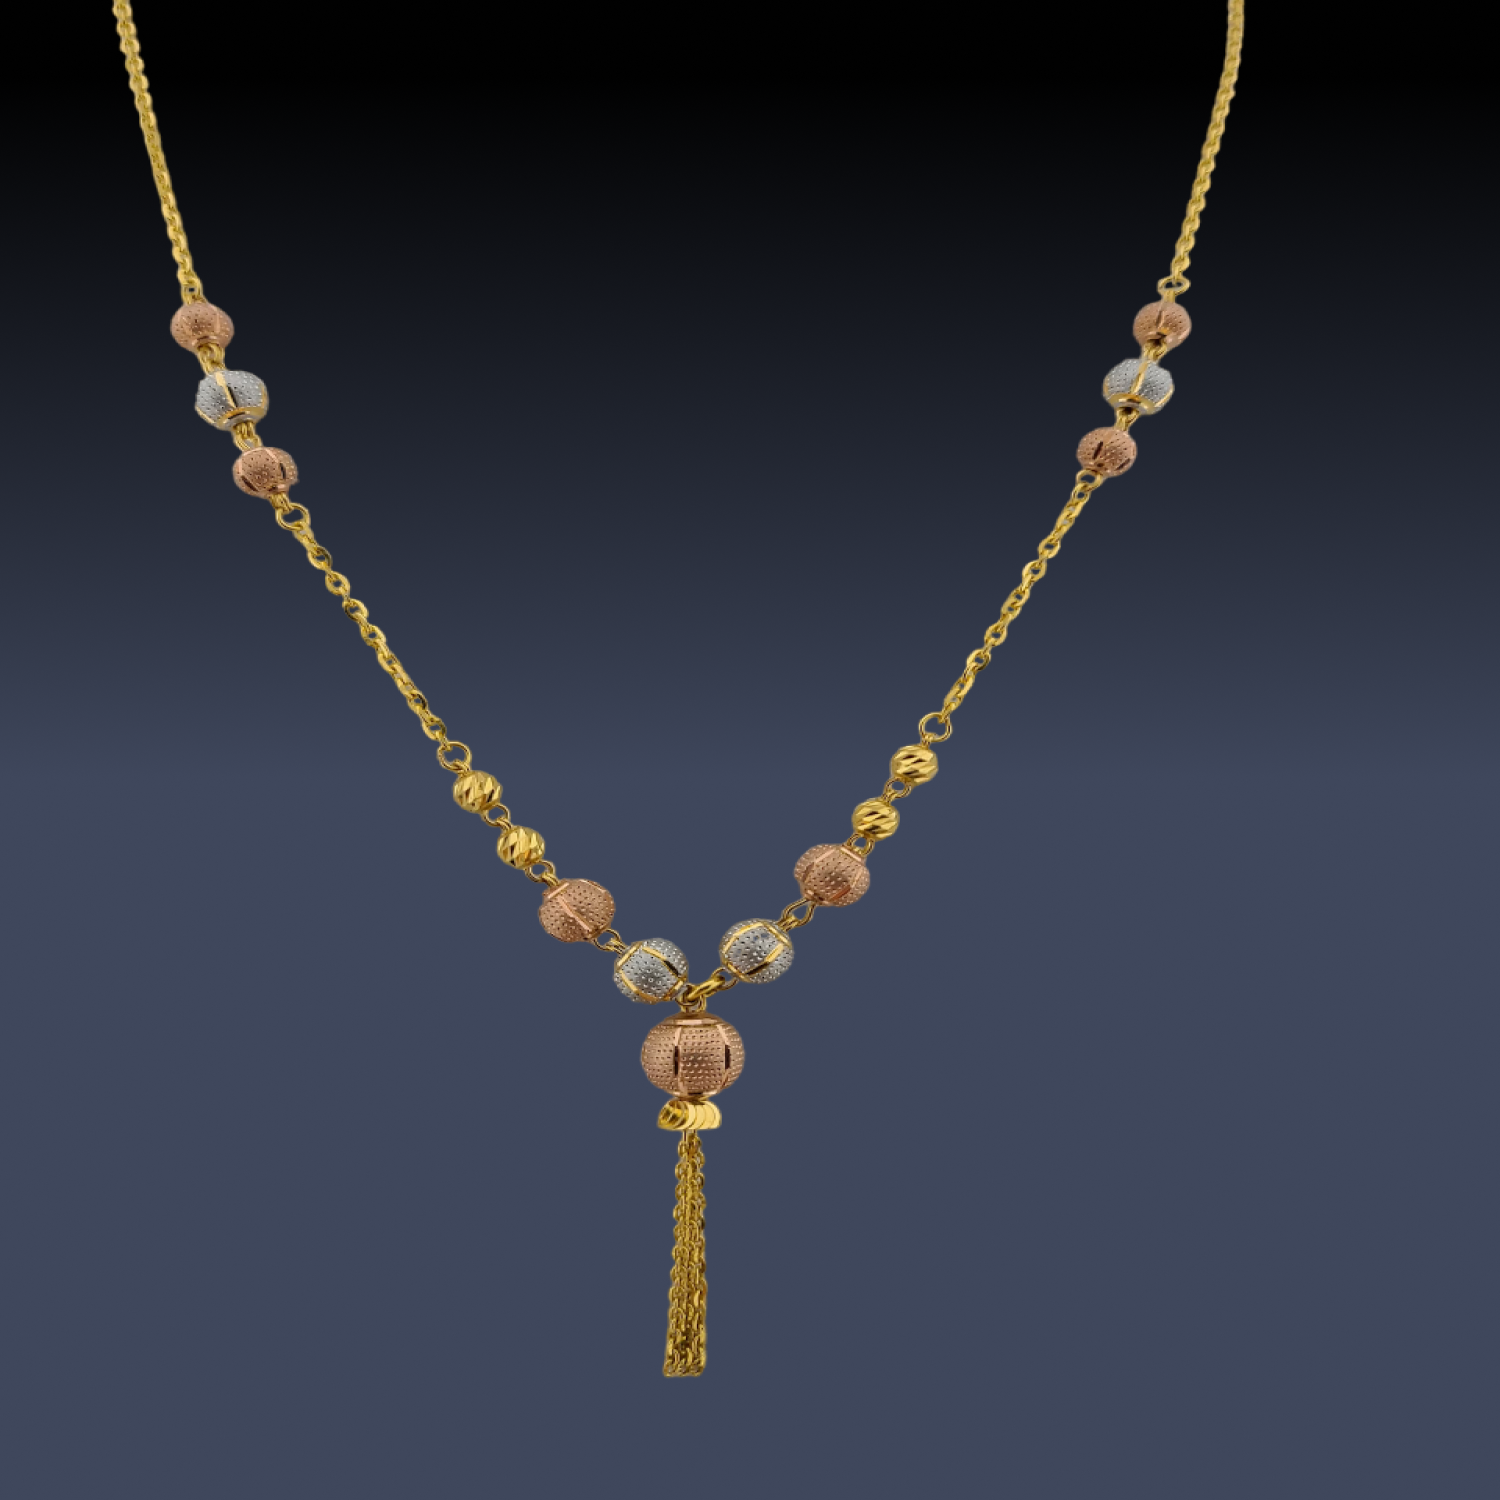 Beads Chain Three Tone Gold Chain Necklace 24kdiamond